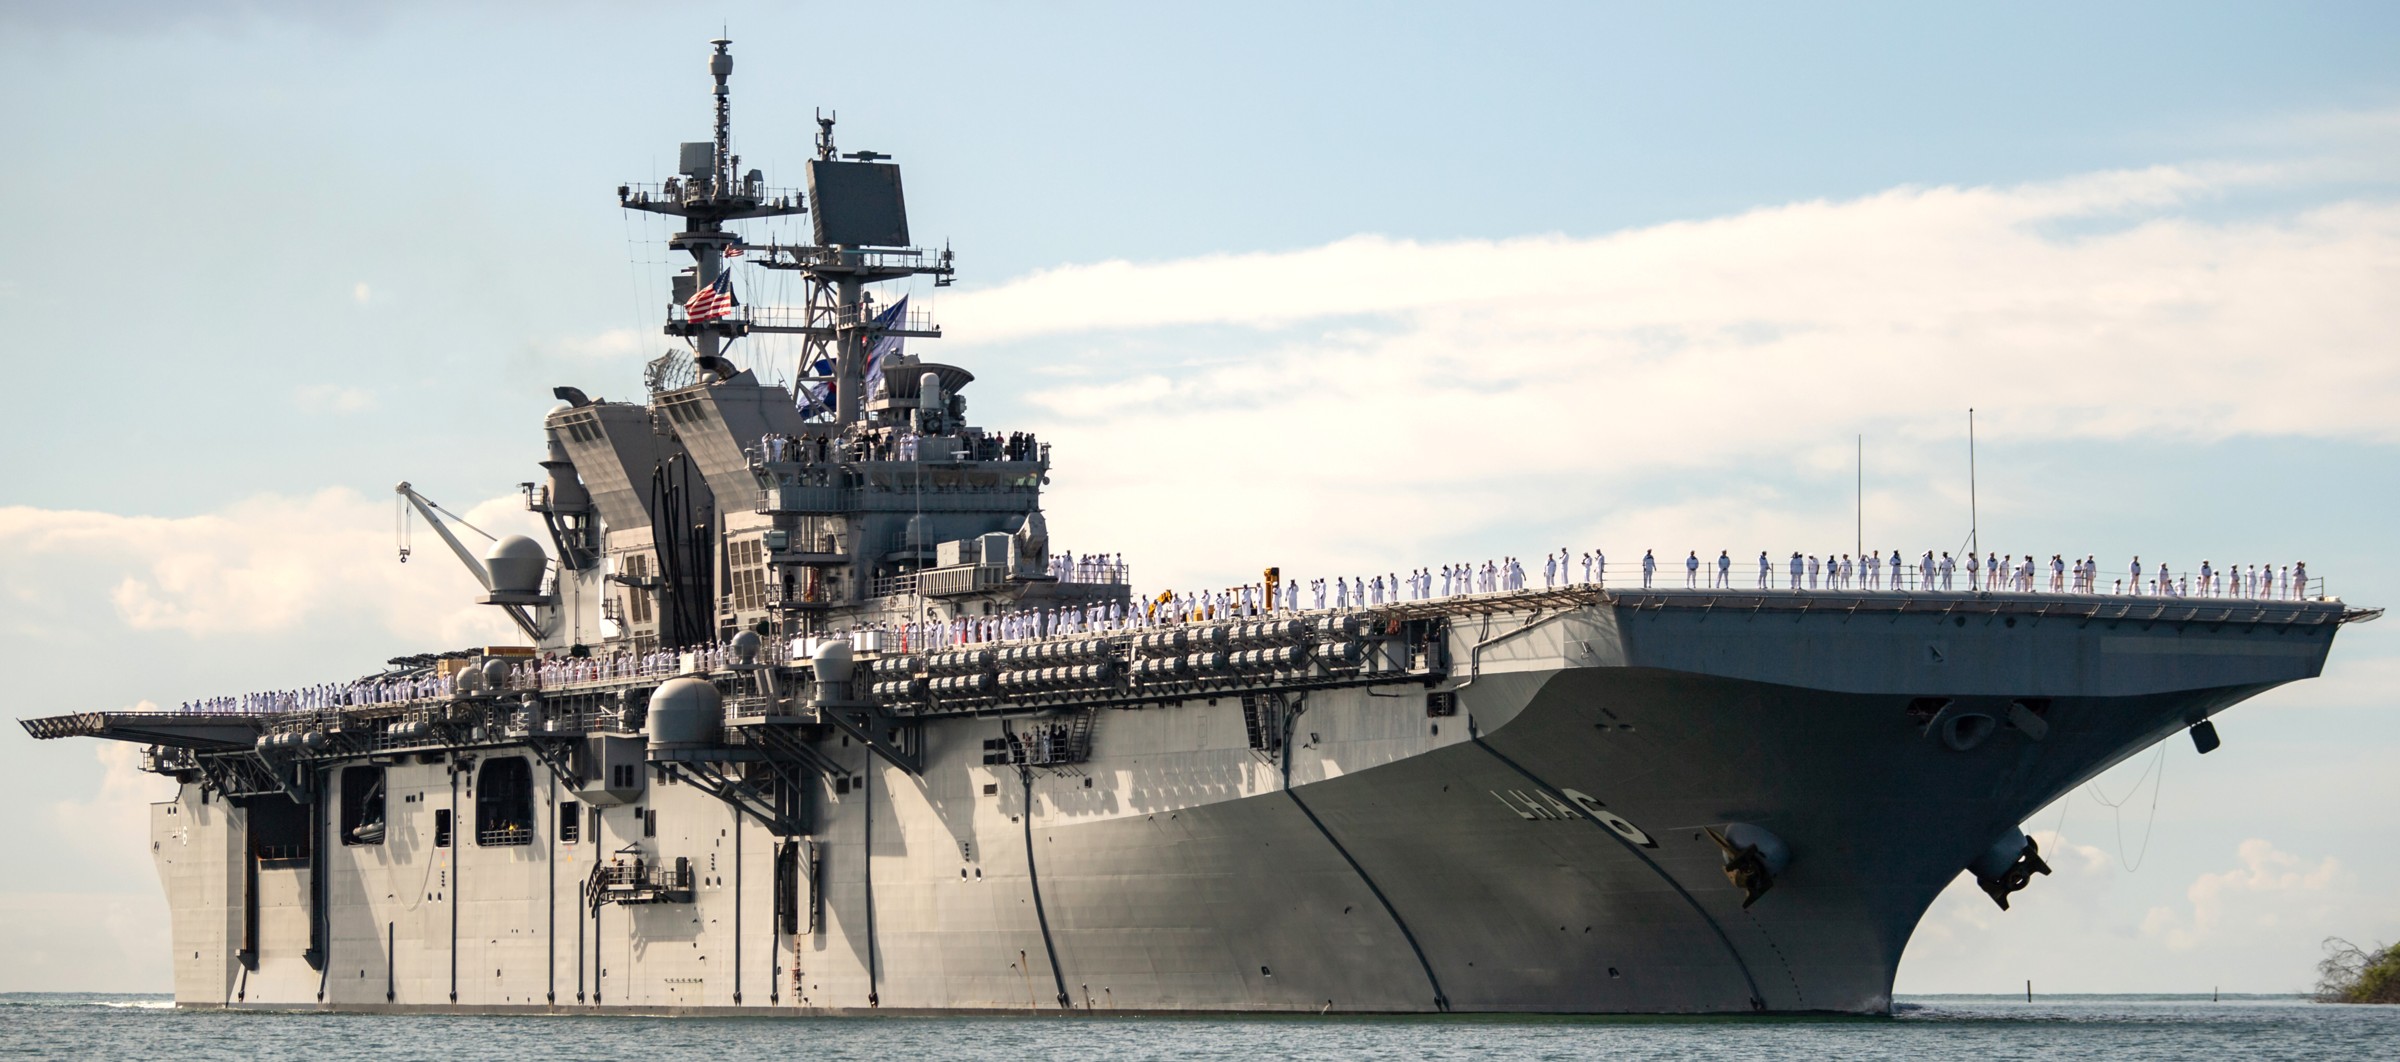 lha-6 uss america amphibious assault ship landing us navy joint base pearl harbor hickam hawaii 149